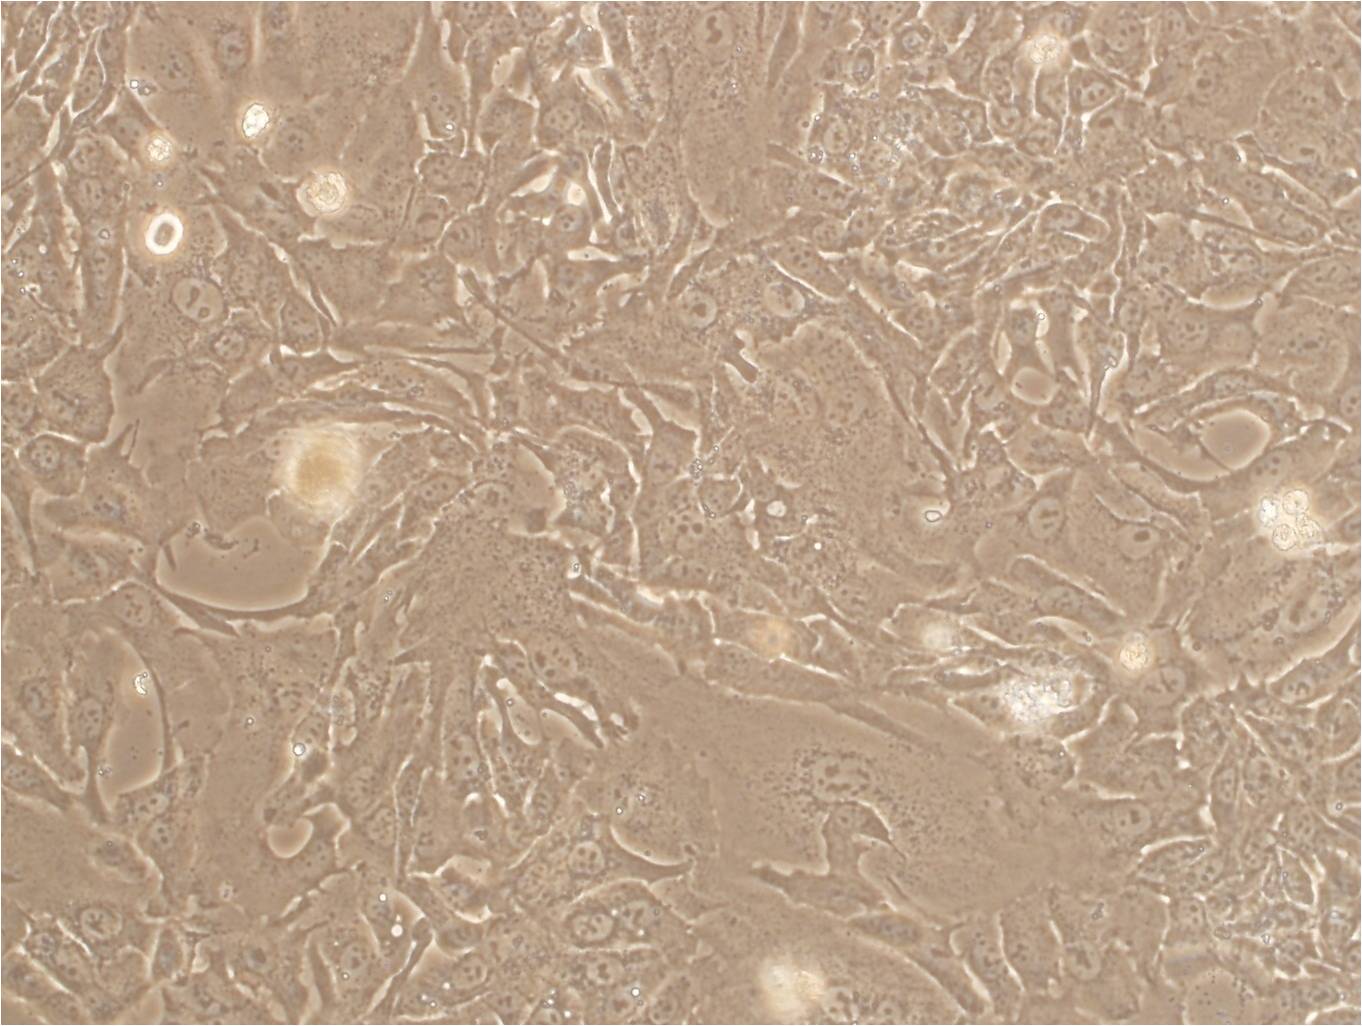 HCC1143 cell line人乳腺导管癌细胞系